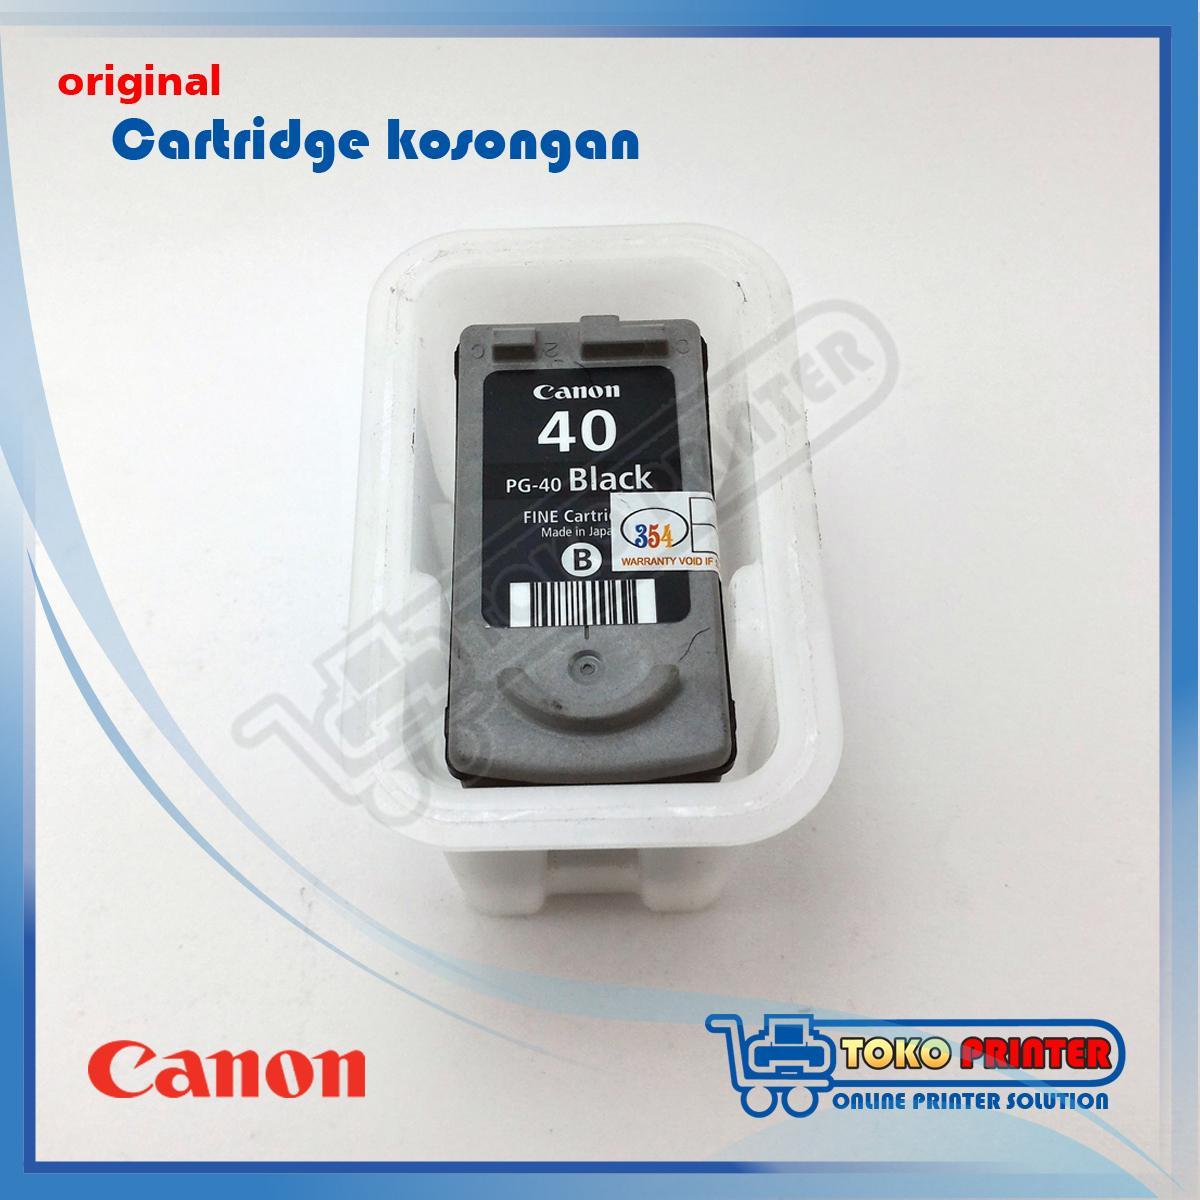 Cartridge Kosongan Canon PG-40